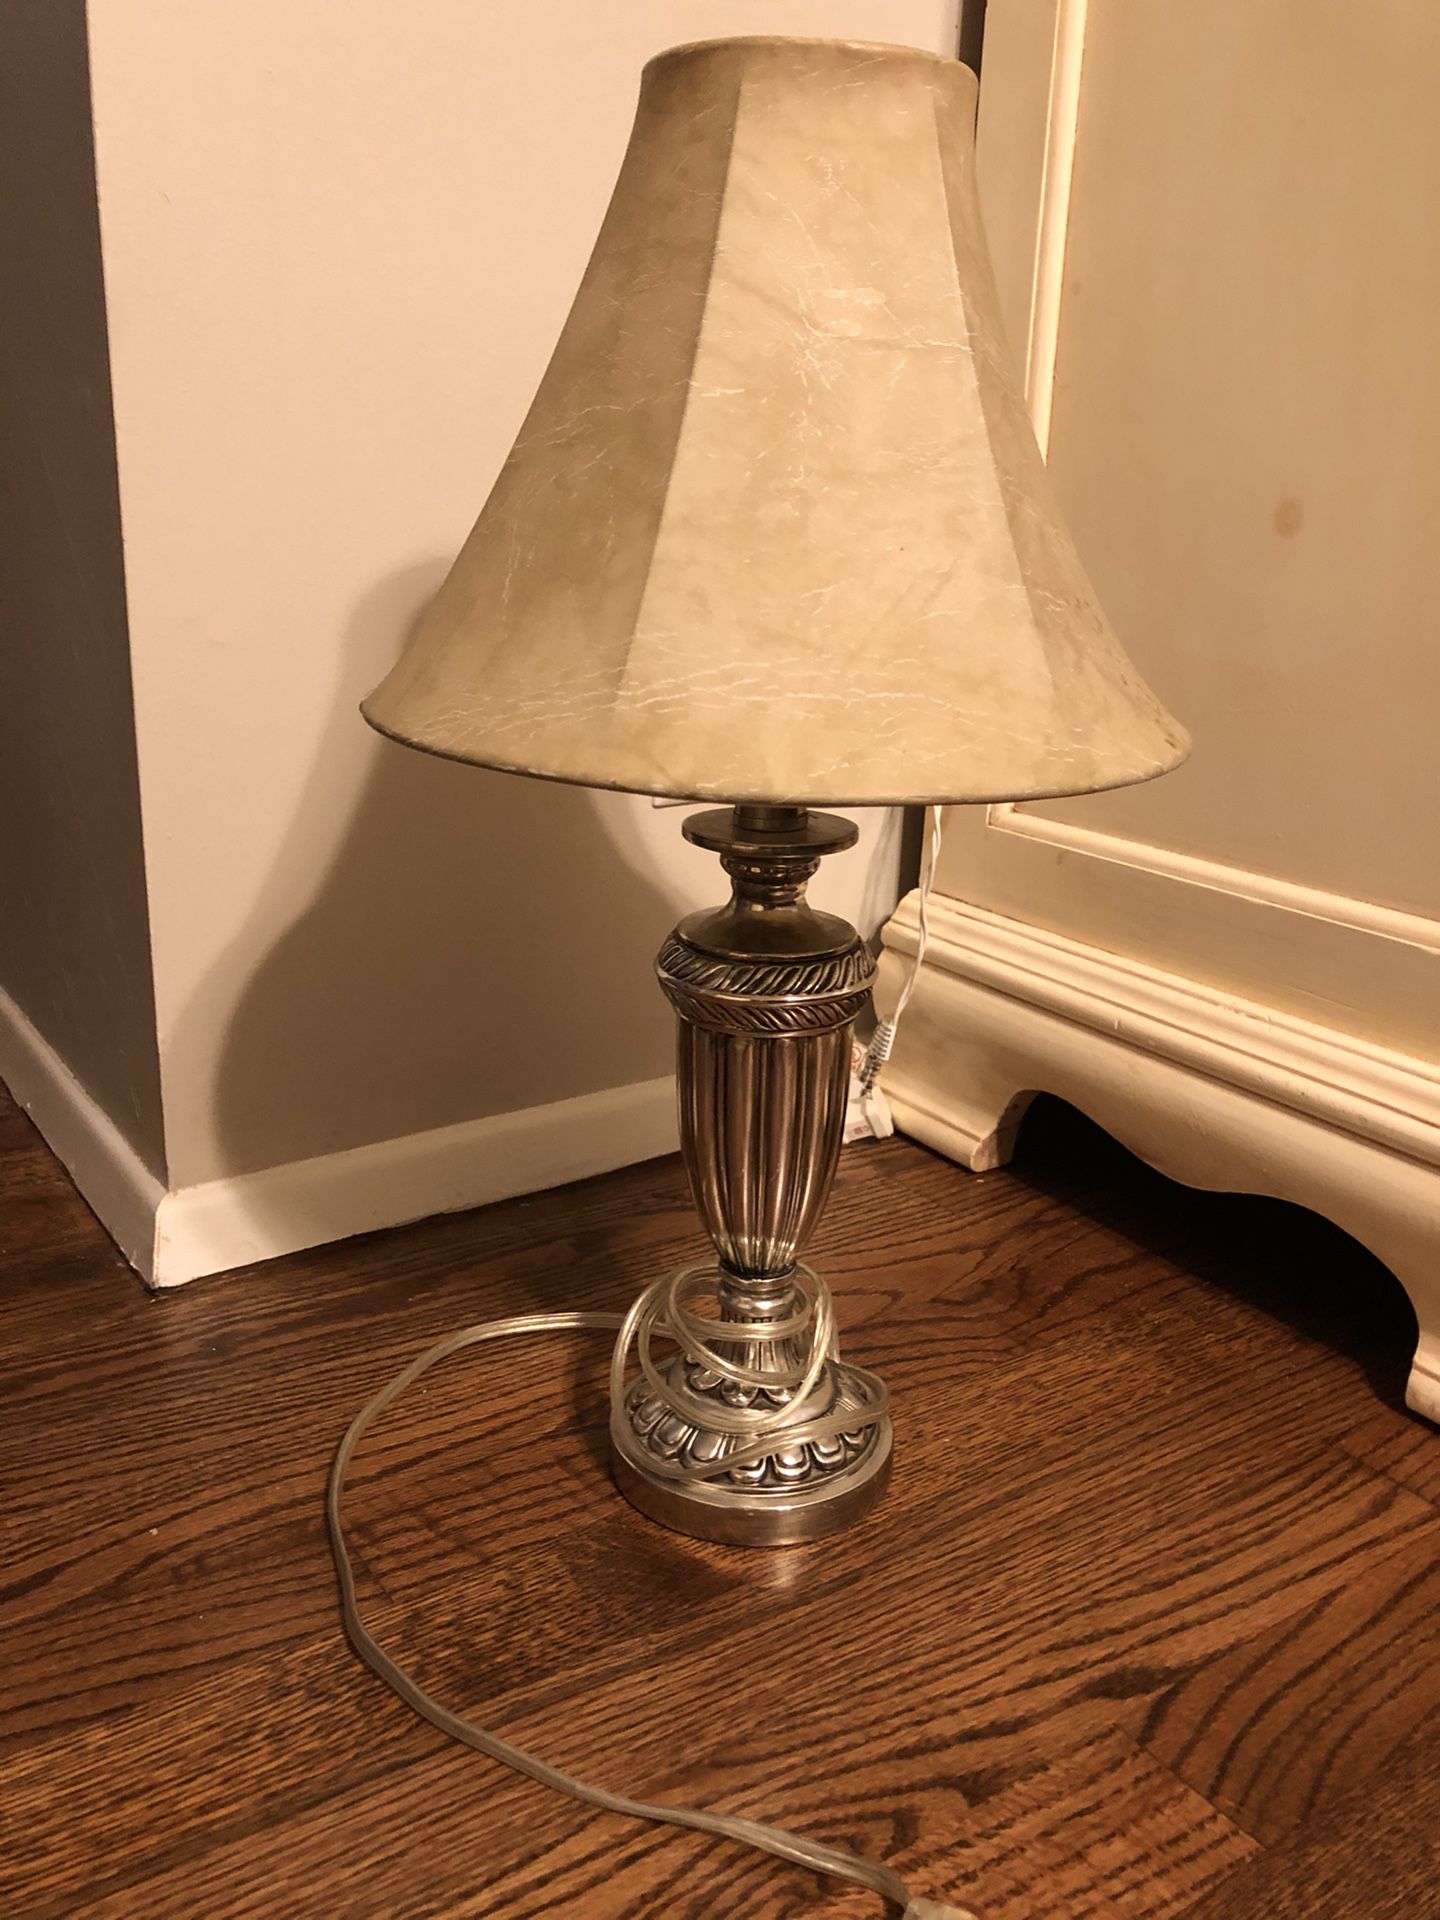 Small Lamp